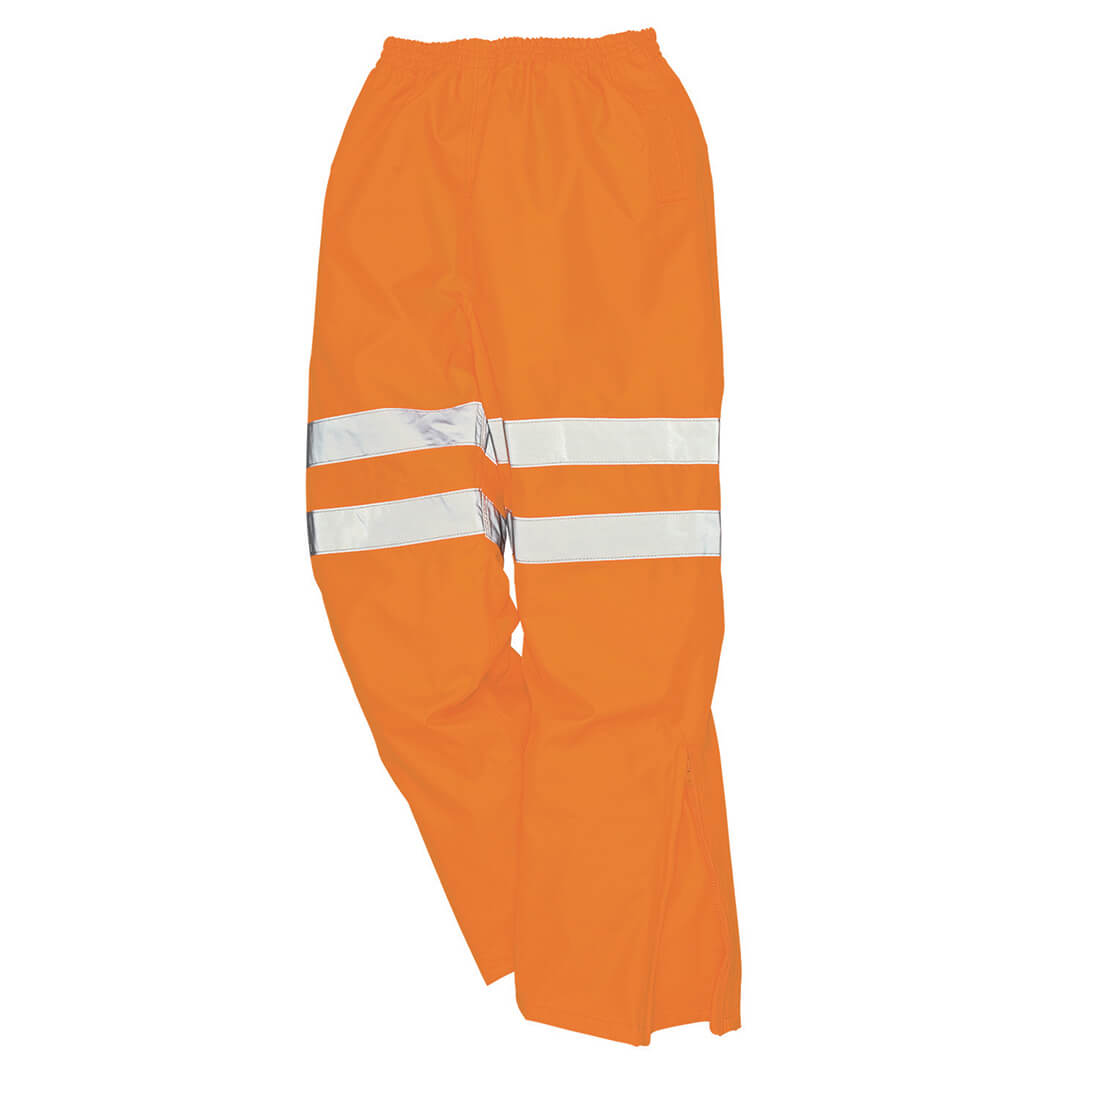 Image of Oxford Weave 300D Class 2 Breathable Hi Vis Breathable Trousers Orange XL